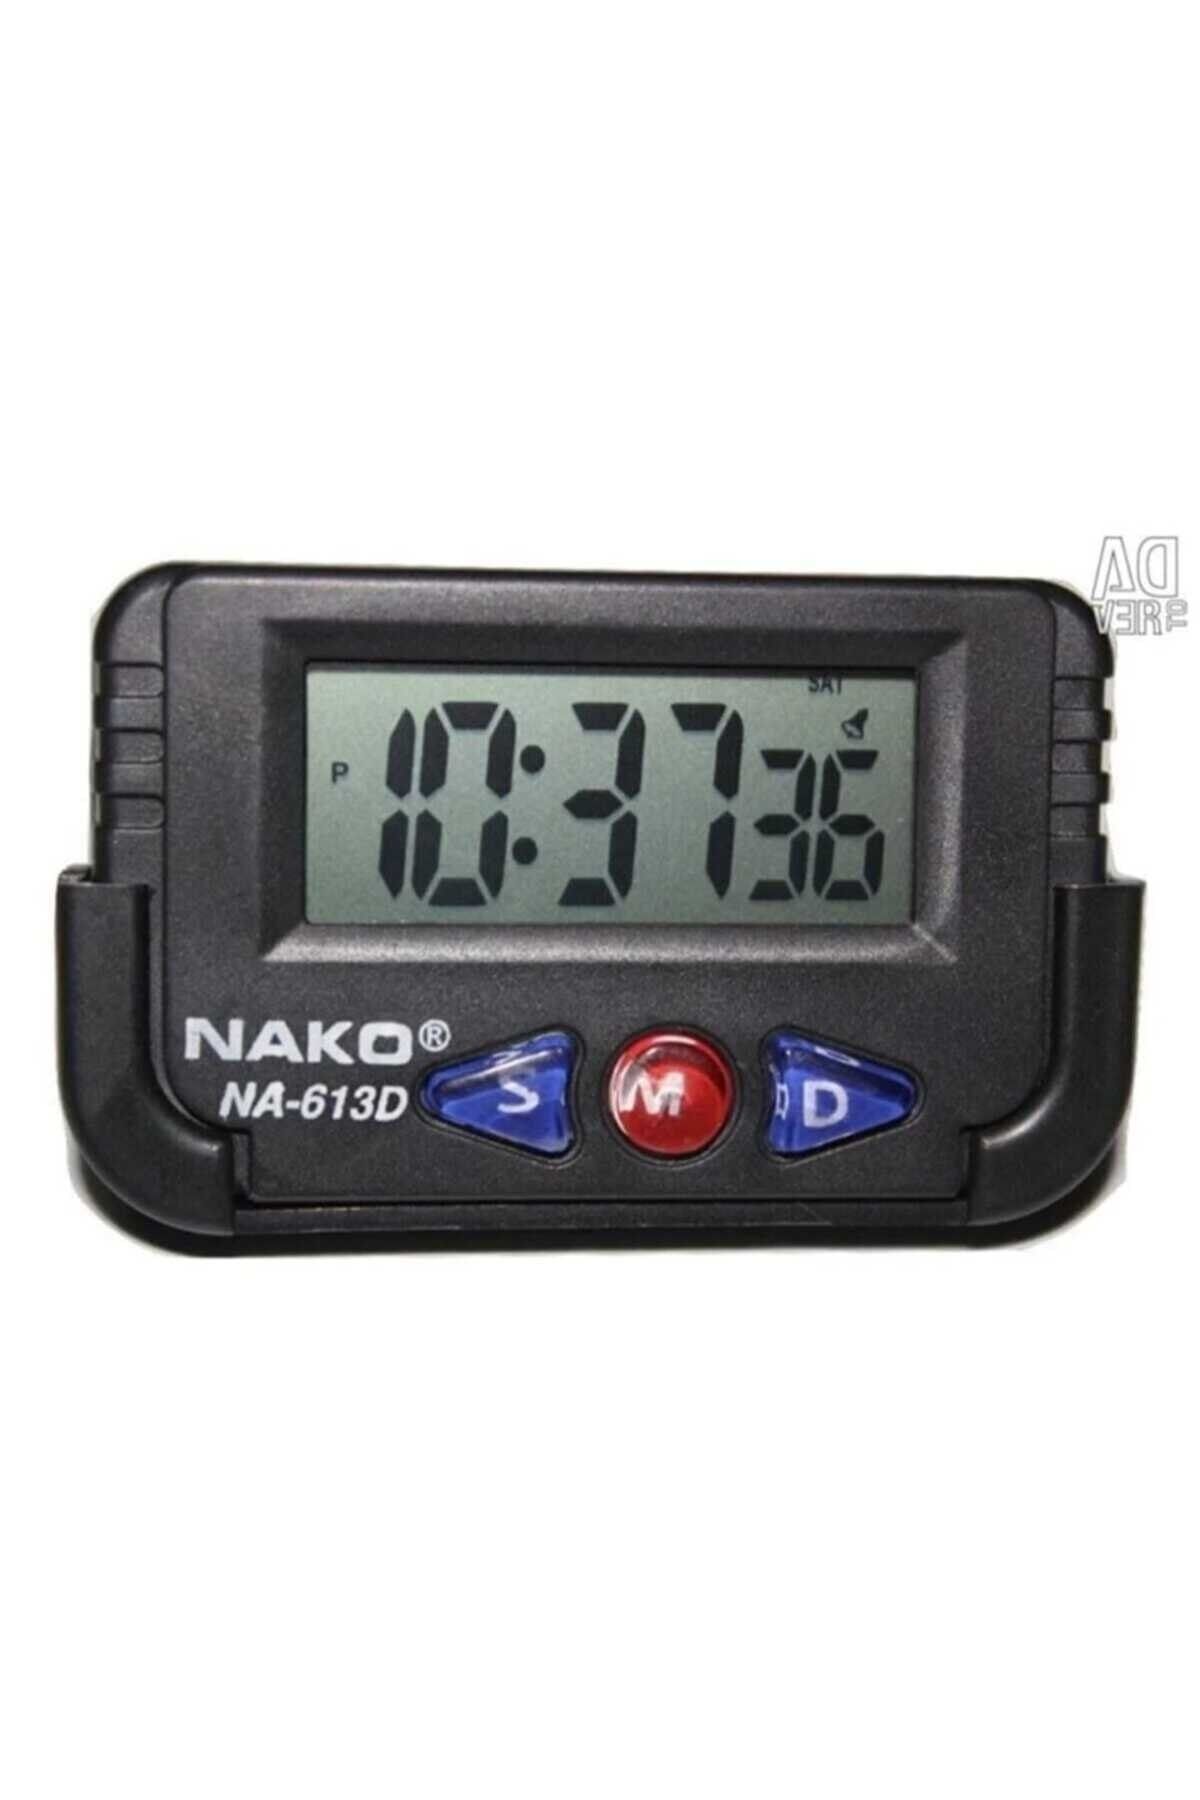 Nako Dijital Alarmlı Saat Kronometre Masa Ve Araç Saati Na-613d - 2 Adet